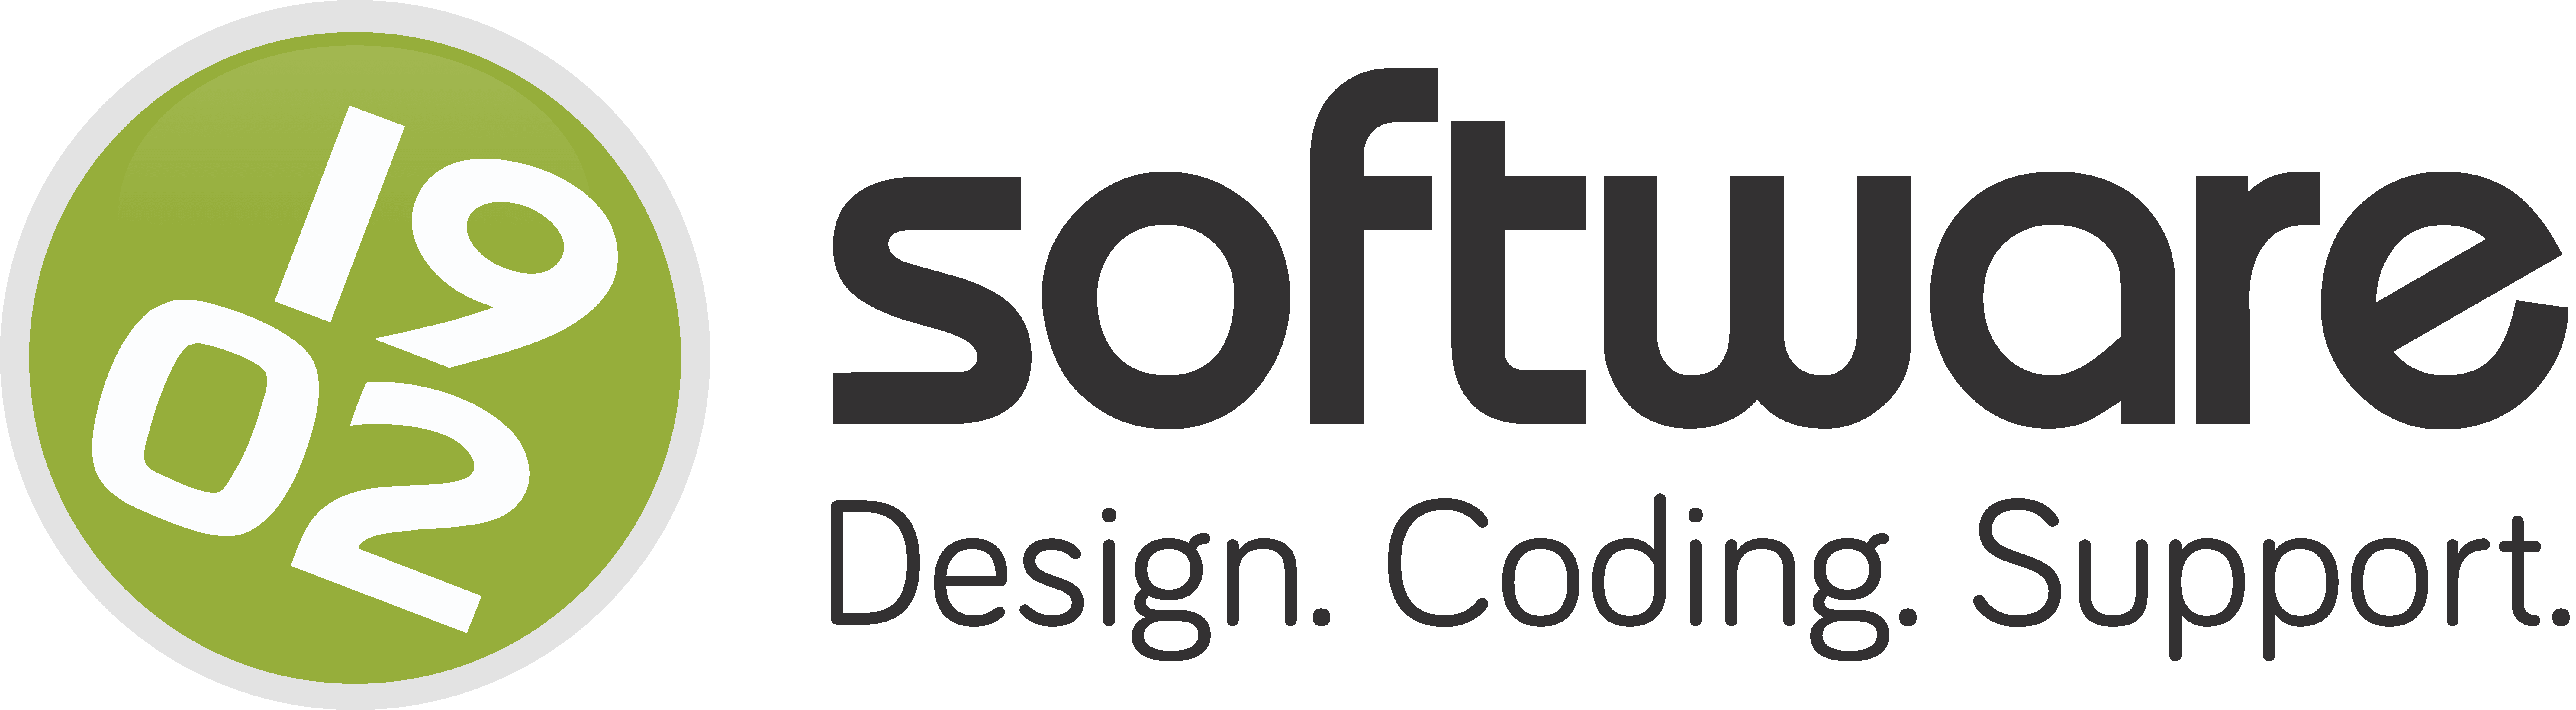 902 Software Development Corporation